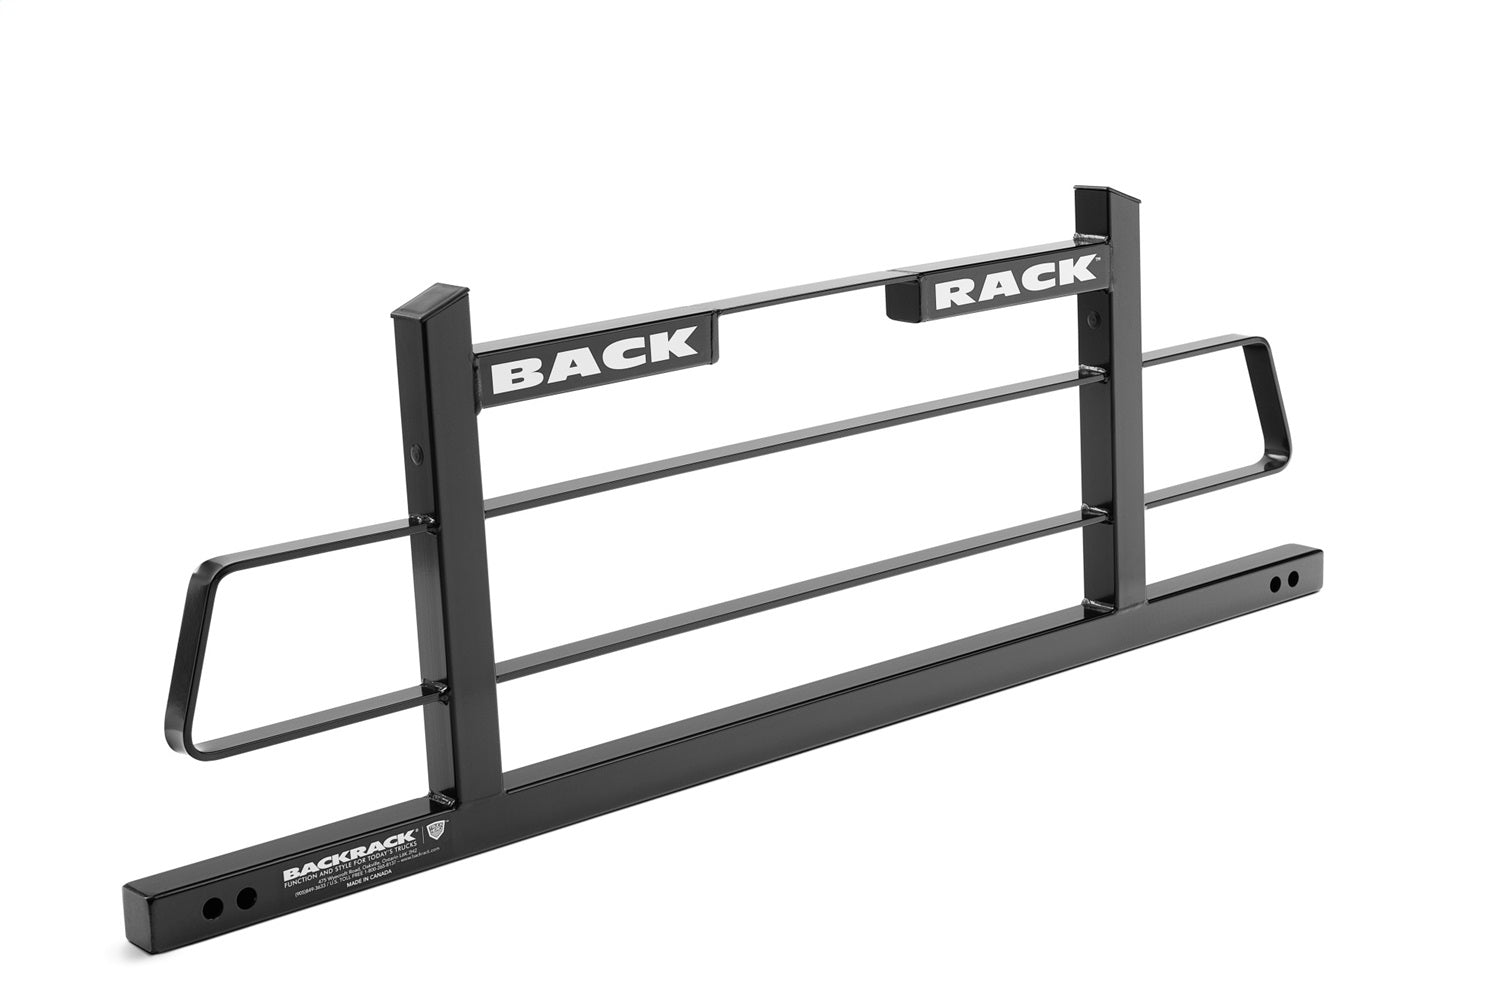 Backrack 15004 Backrack Headache Rack Frame